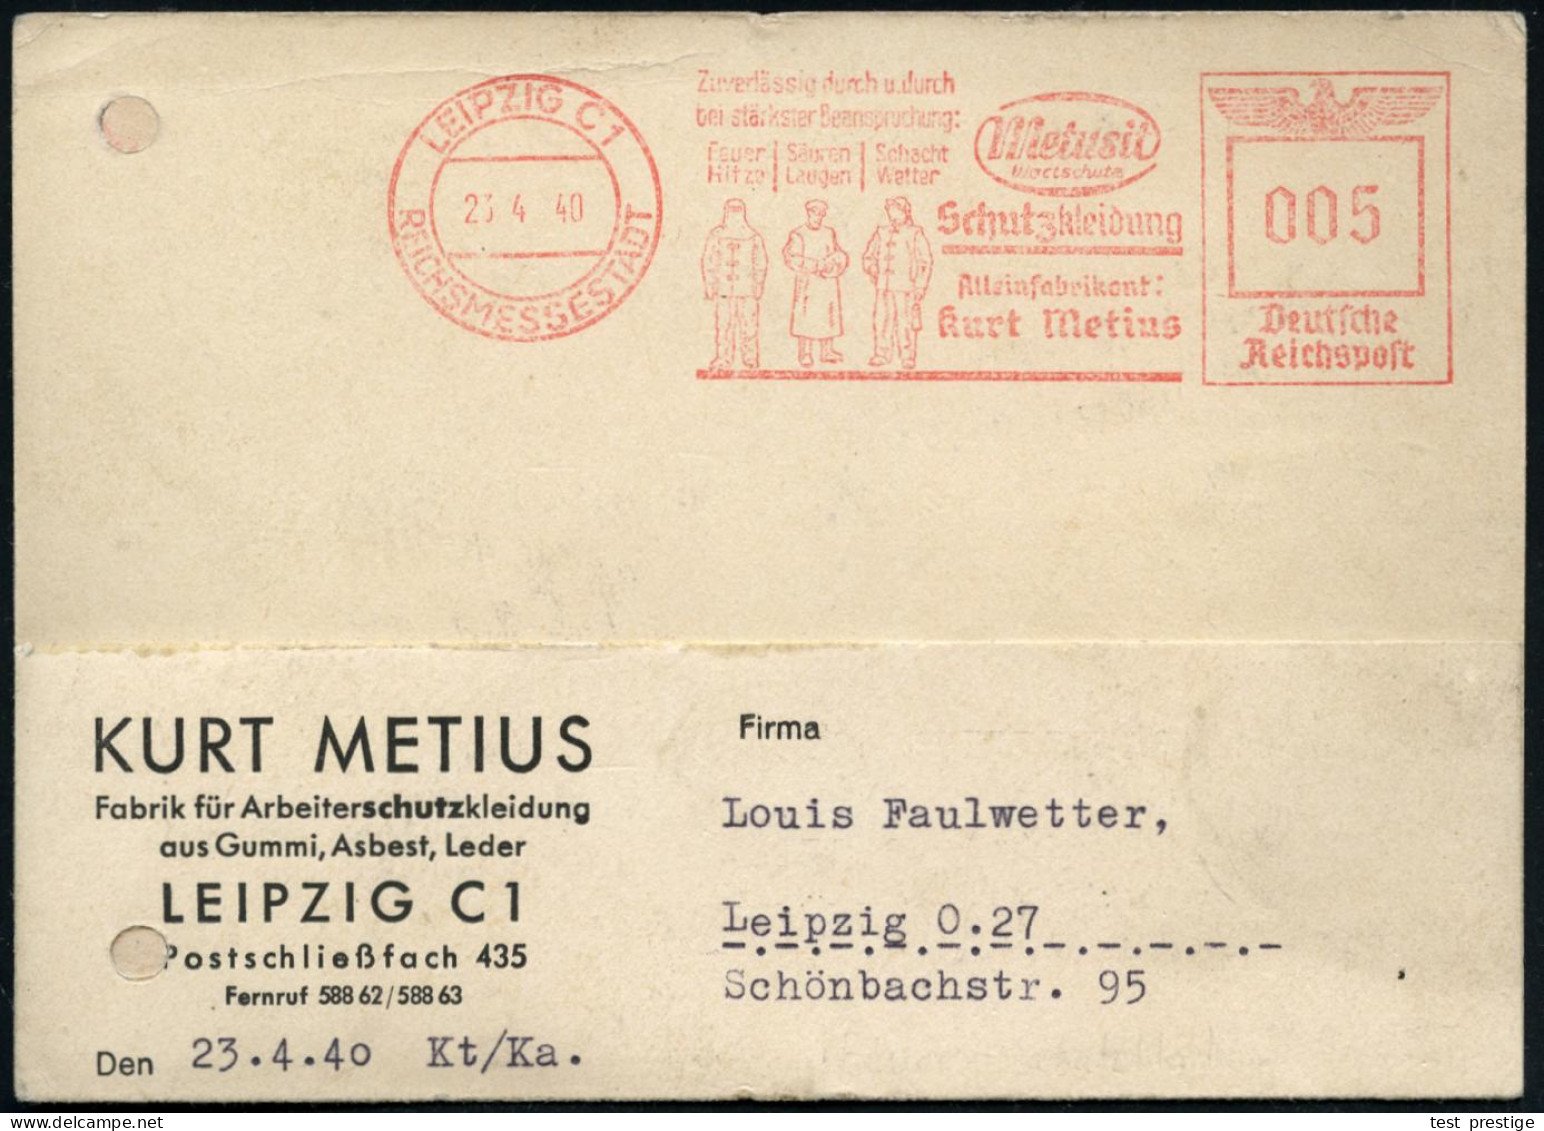 LEIPZIG C1/ REICHSMESSESTADT/ Metusit/ ..Schutzkleidung/ Feuer/ Hitze/ Säuren/ Laugen/ Schacht../ Kurt Metius 1940 (23.4 - Bombero